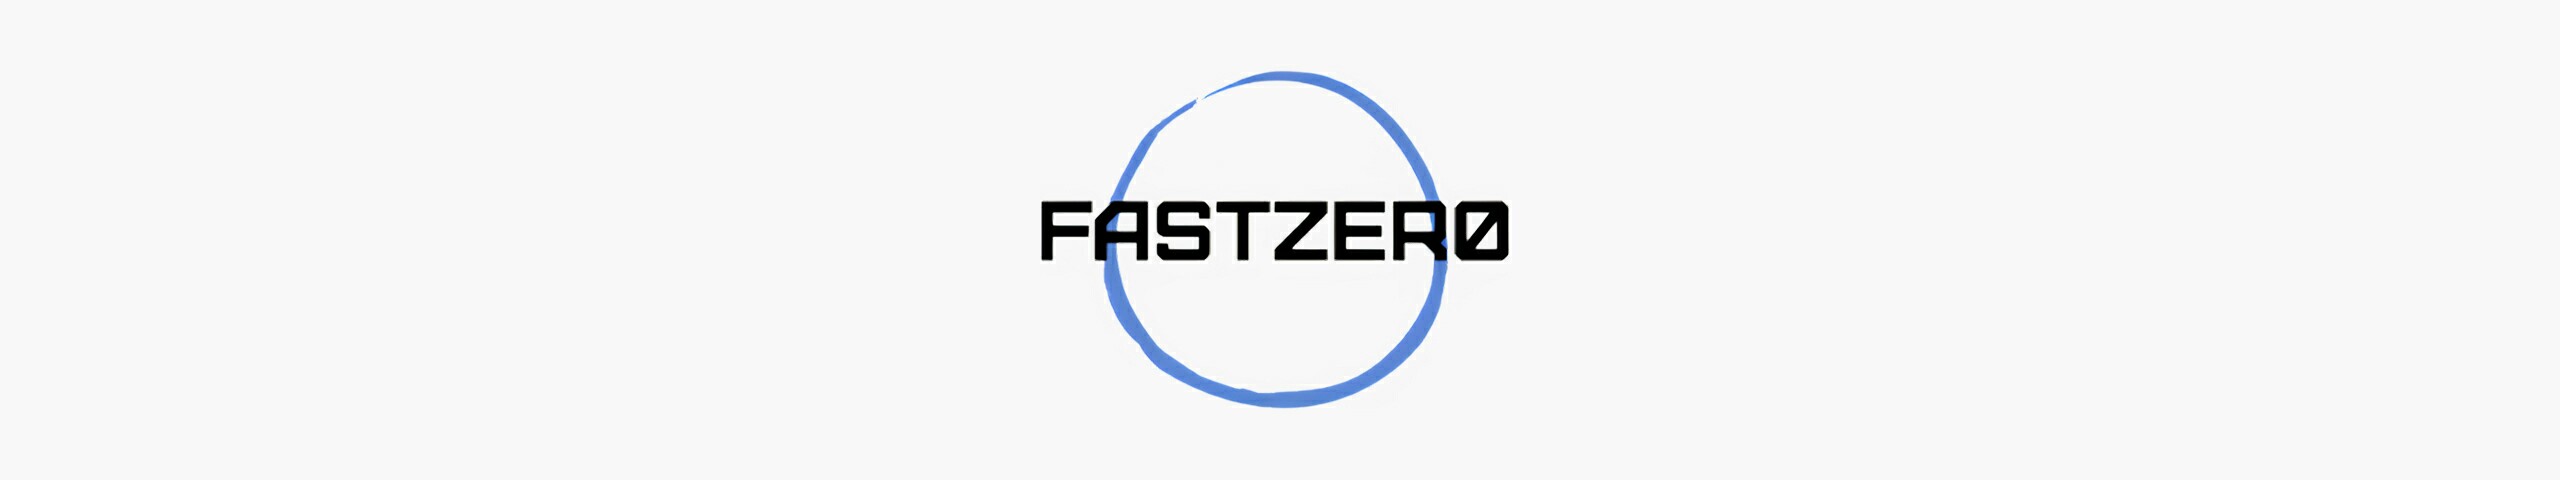 creator cover fastzer0